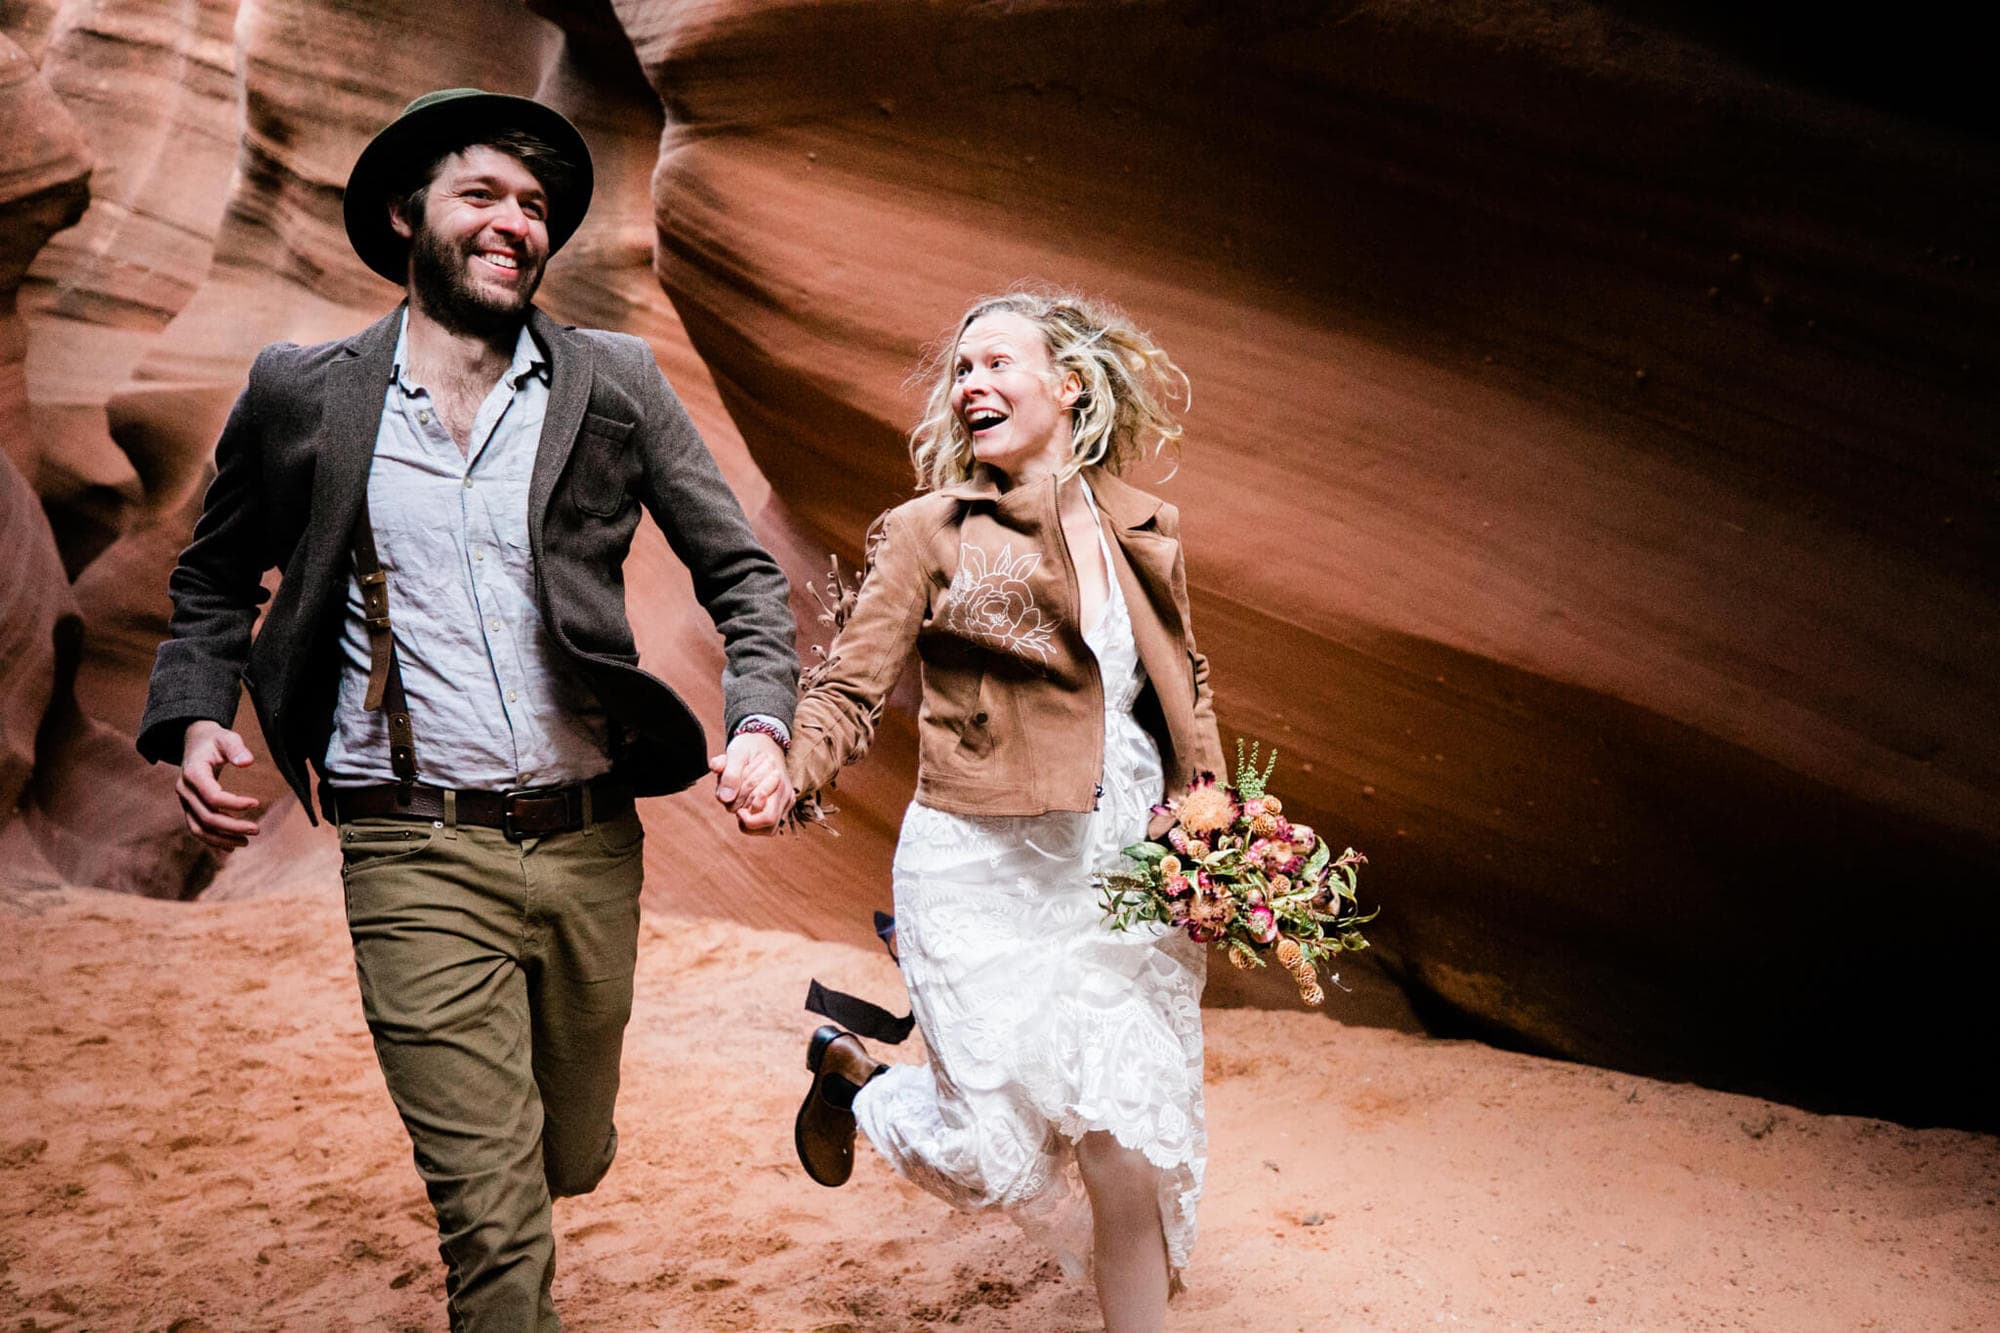 A joyous, adventerous couple runs through a slot canyon on their elopement day.